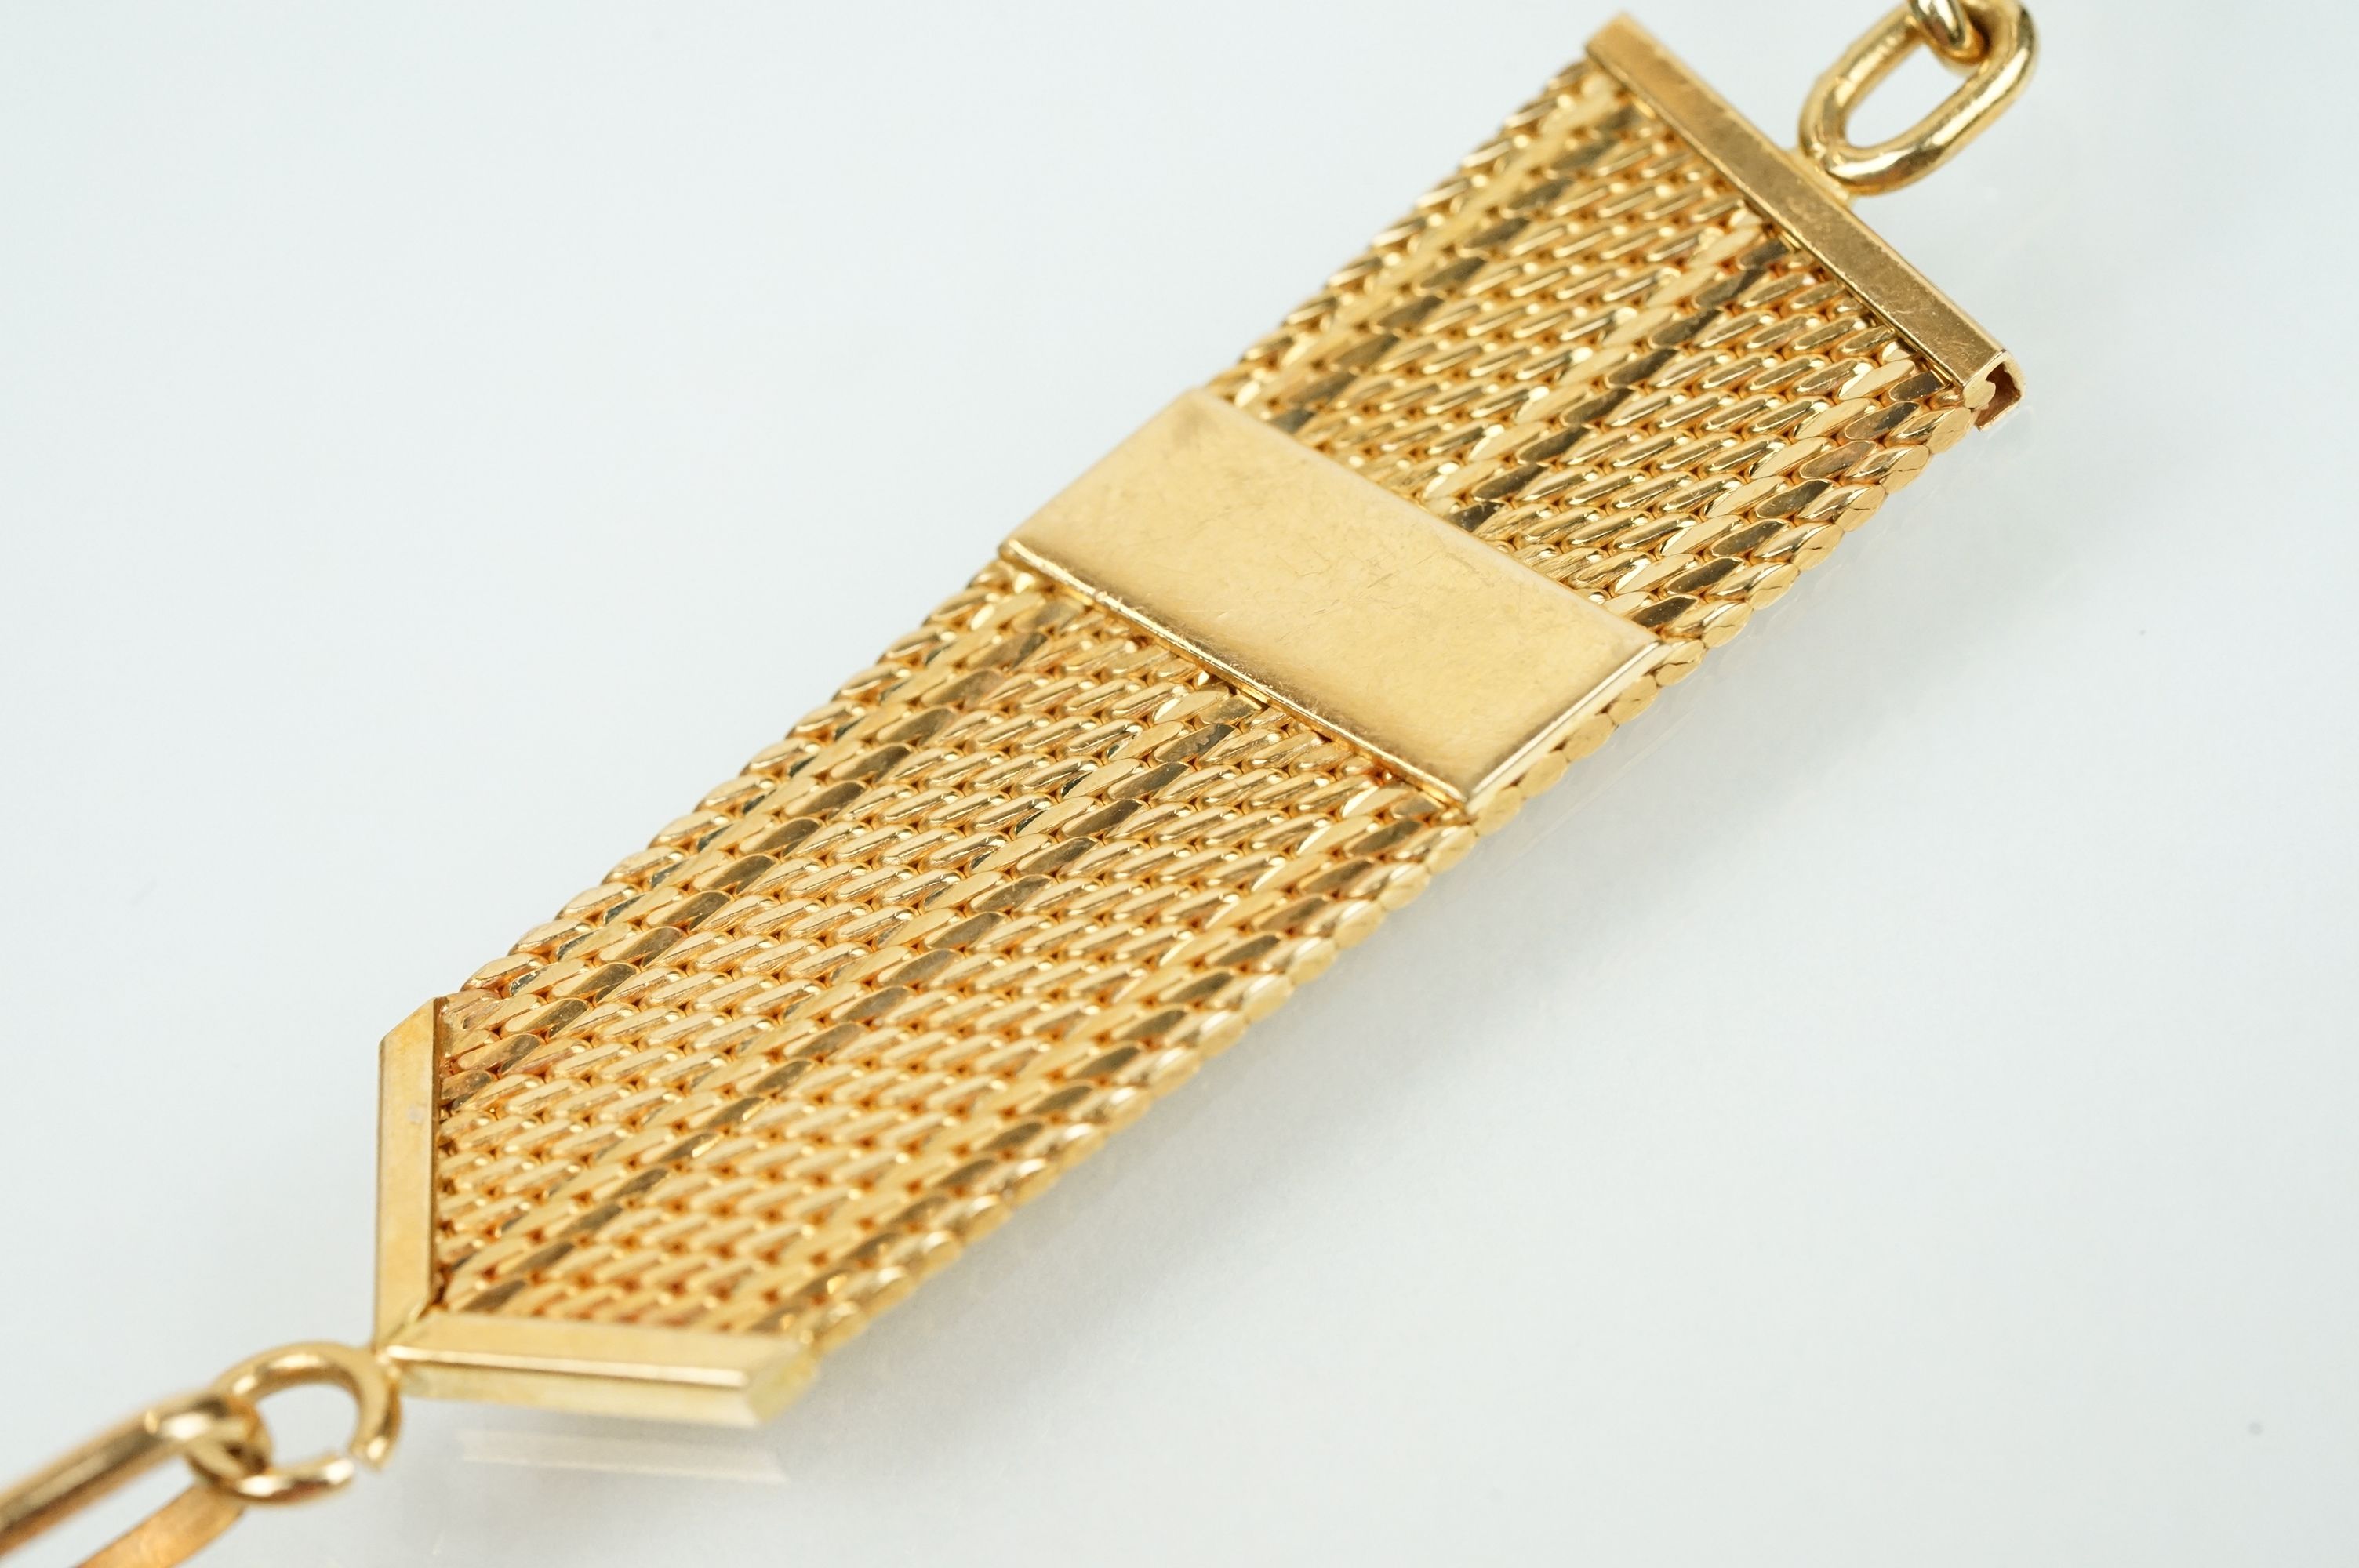 18ct gold key ring having a Saudi Arabian emblem pendant suspended from a mesh link chain. Italian - Bild 4 aus 10